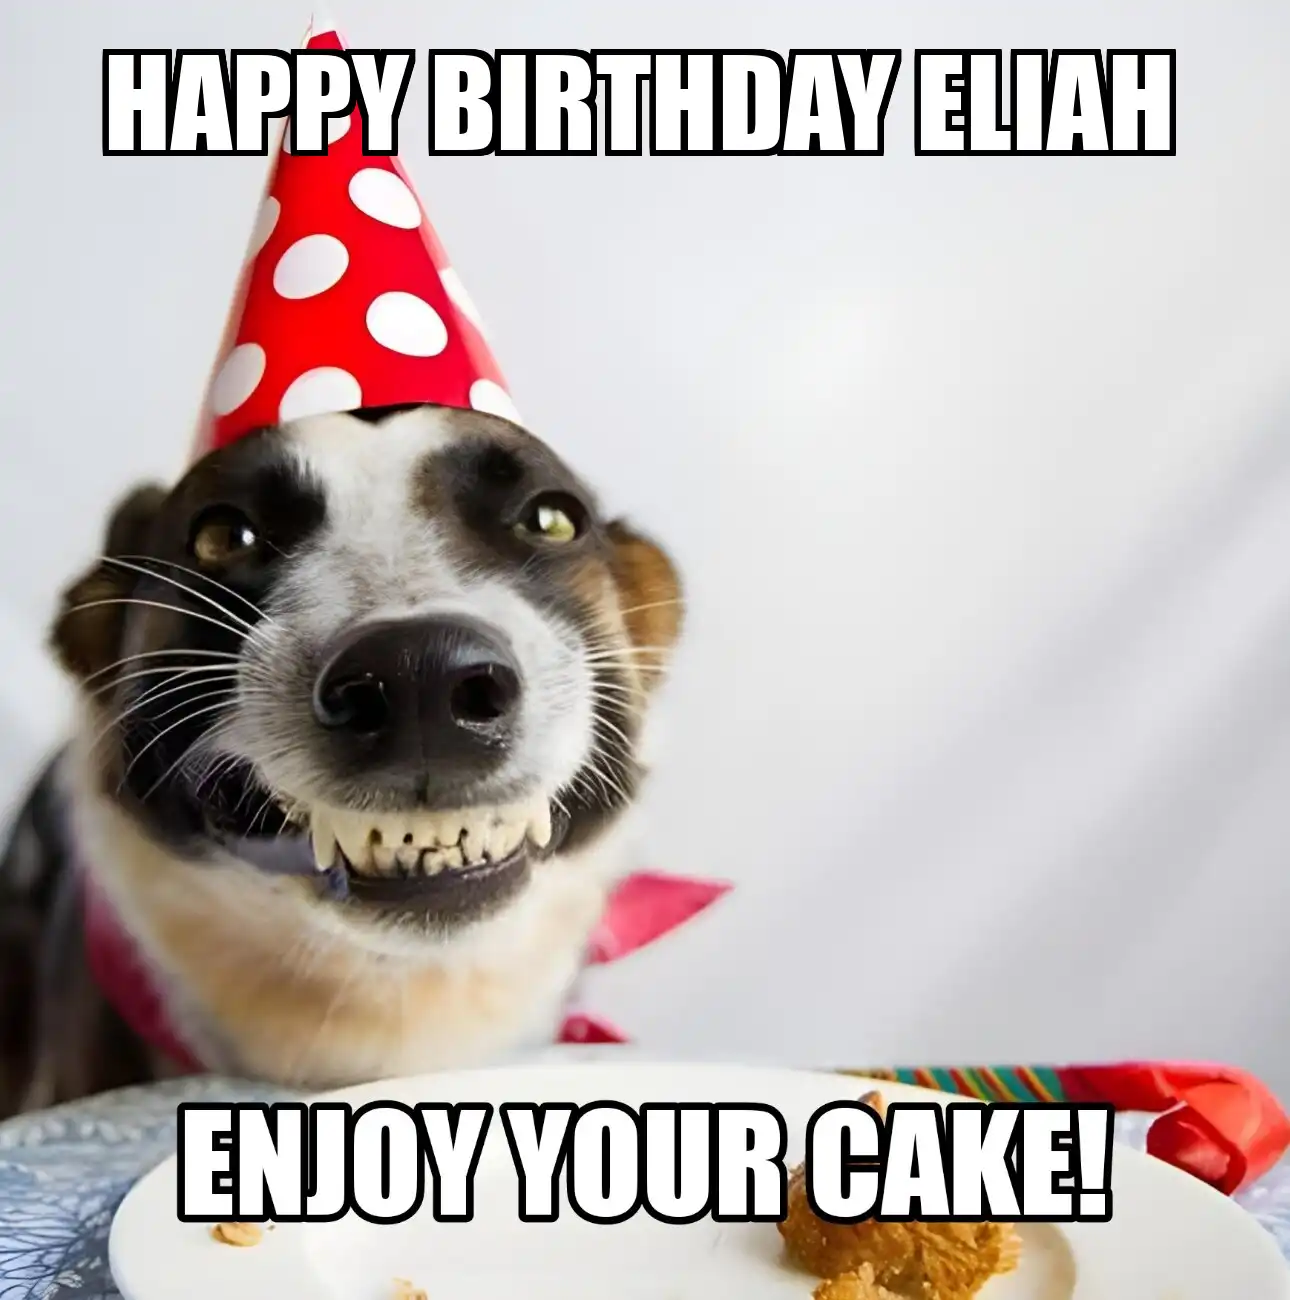 Happy Birthday Eliah Enjoy Your Cake Dog Meme